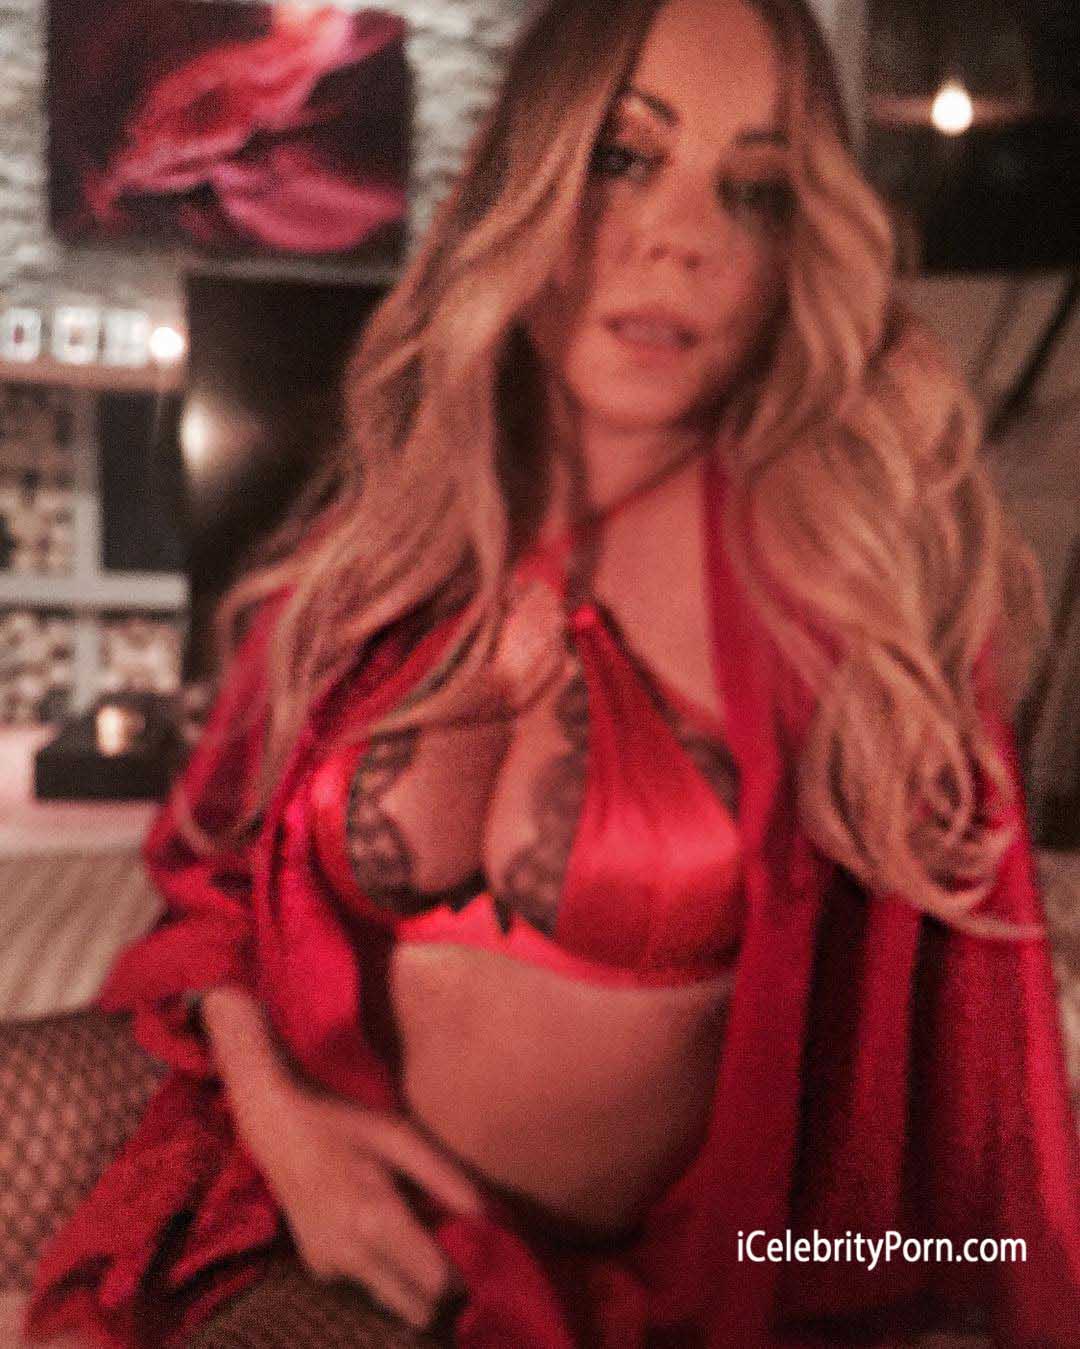 Maria Carey Porn 2016 - Mariah Carey desnuda enseÃ±a sus grandes tetas en la baÃ±era